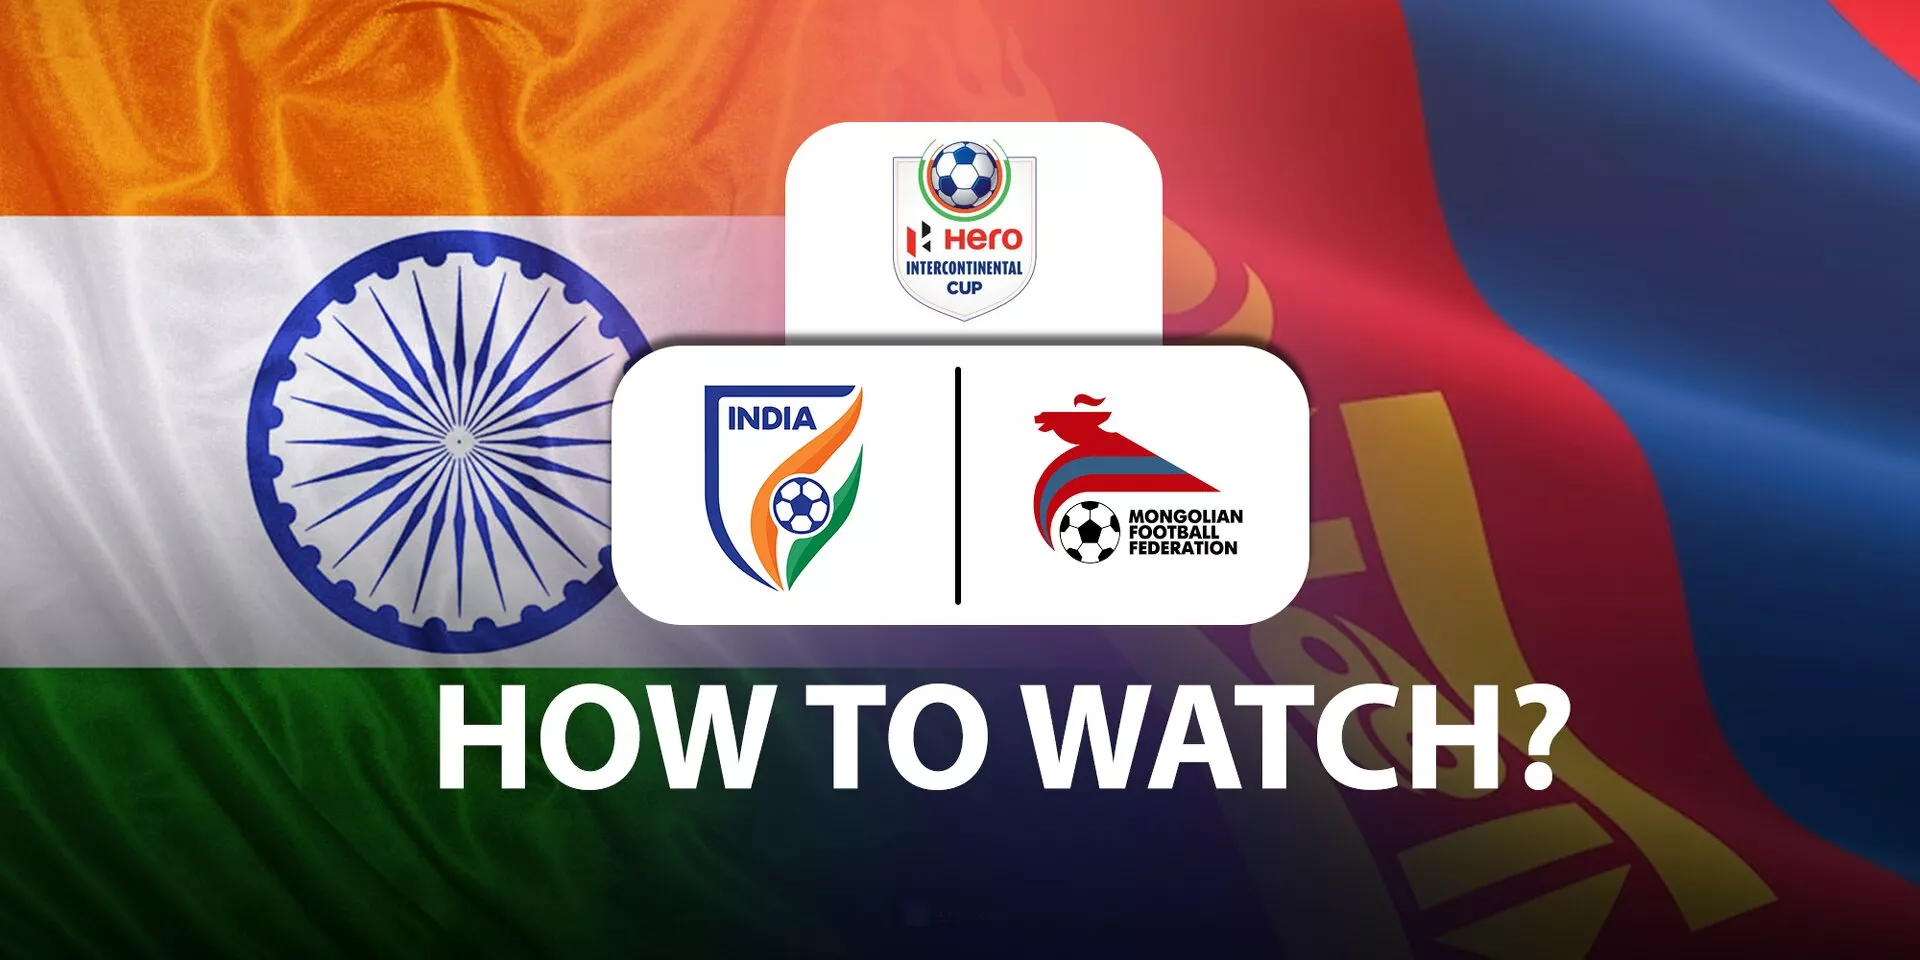 India vs Mongolia Hero Intercontinental Cup Telecast Live Stream details